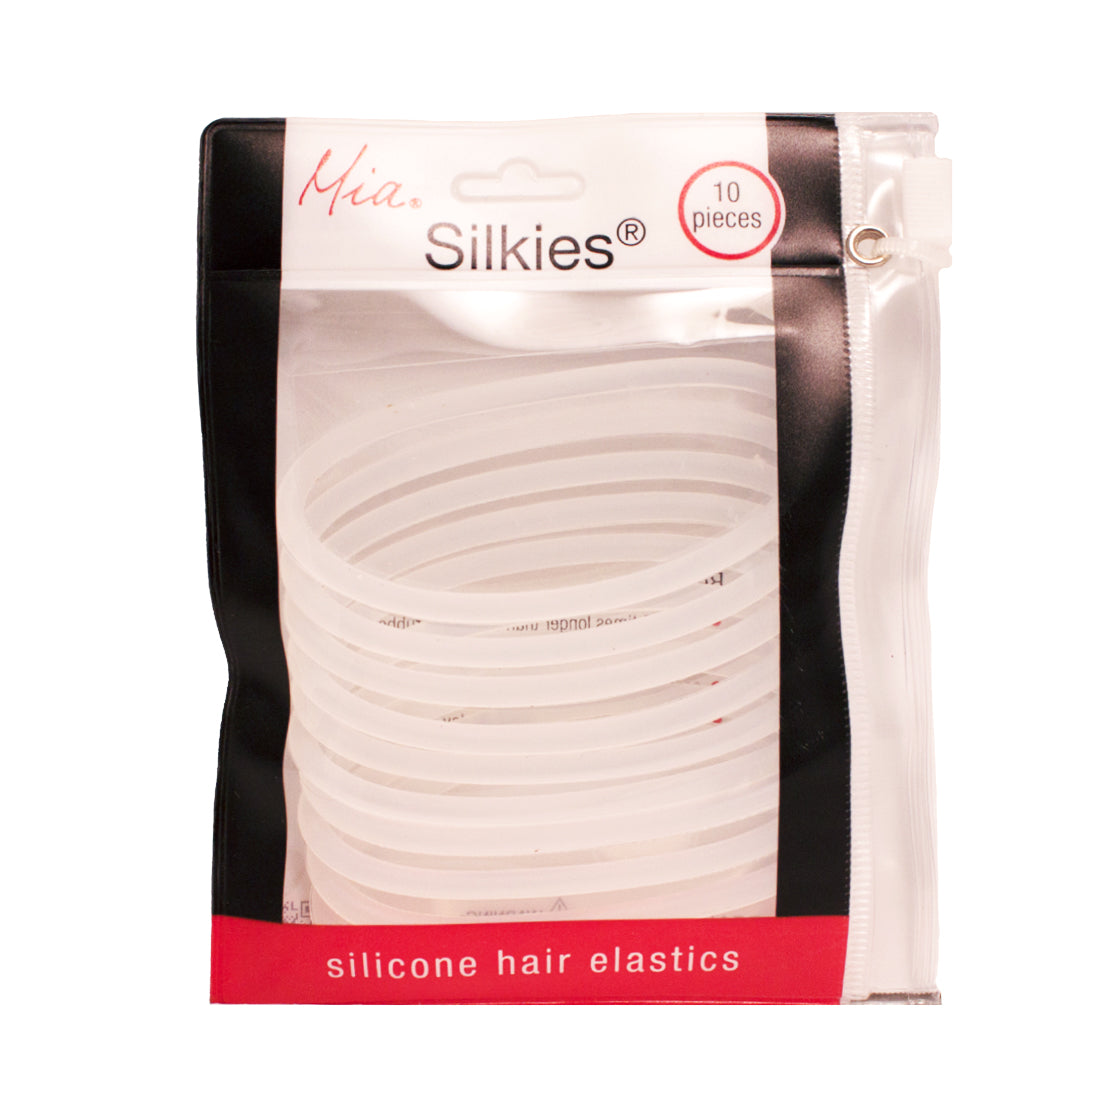 Mia Silkies, Silicone Hair Elastics Rubber Bands Last 10 Times Longer